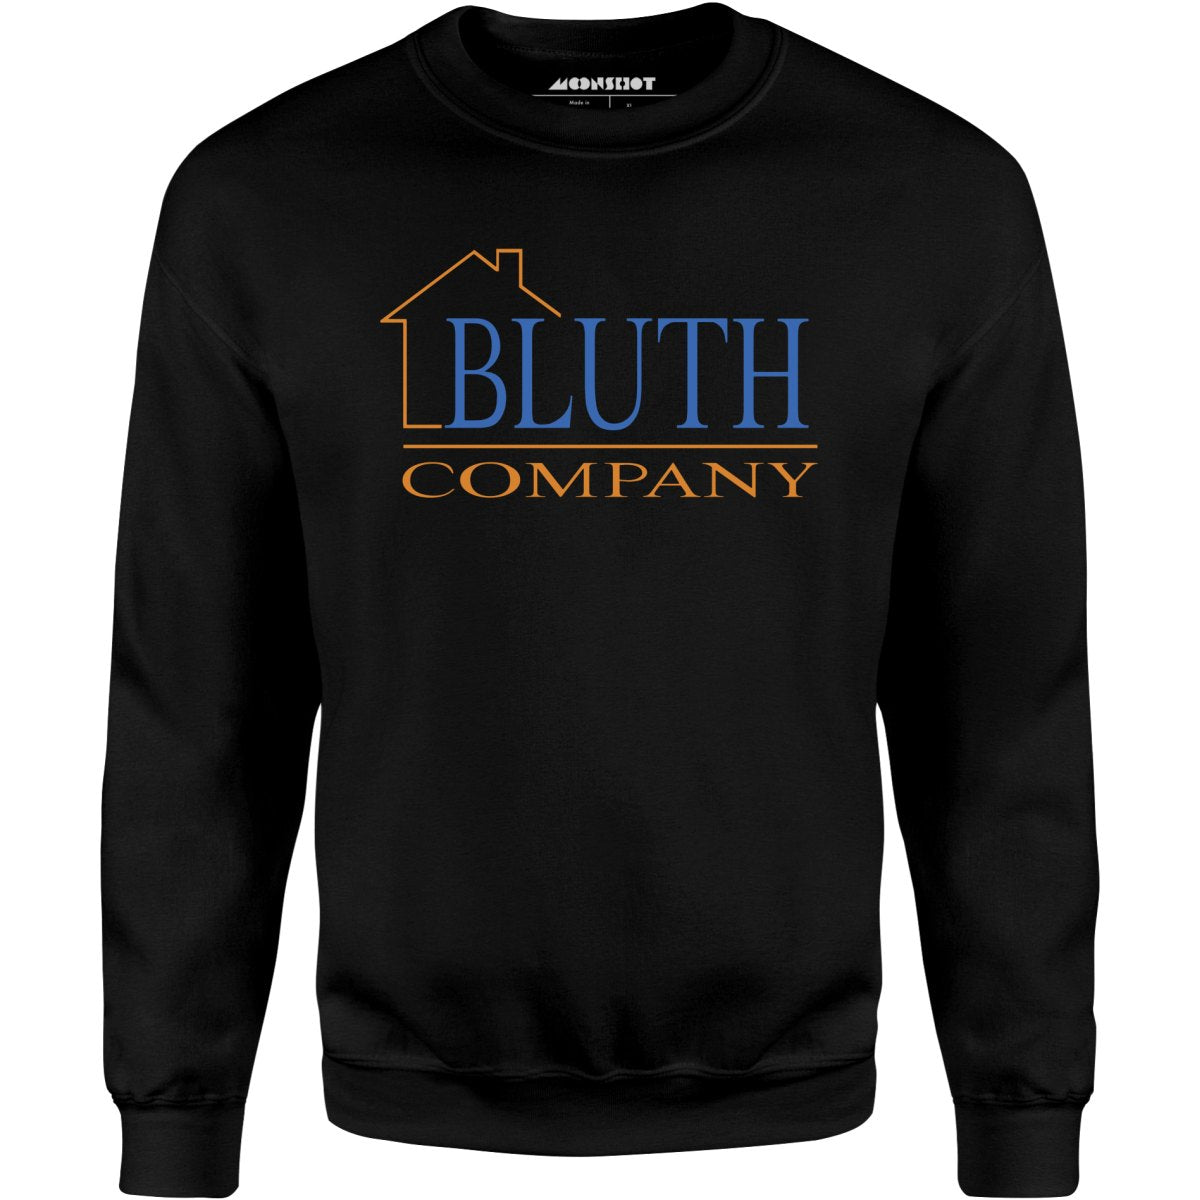 Bluth Company - Unisex Sweatshirt